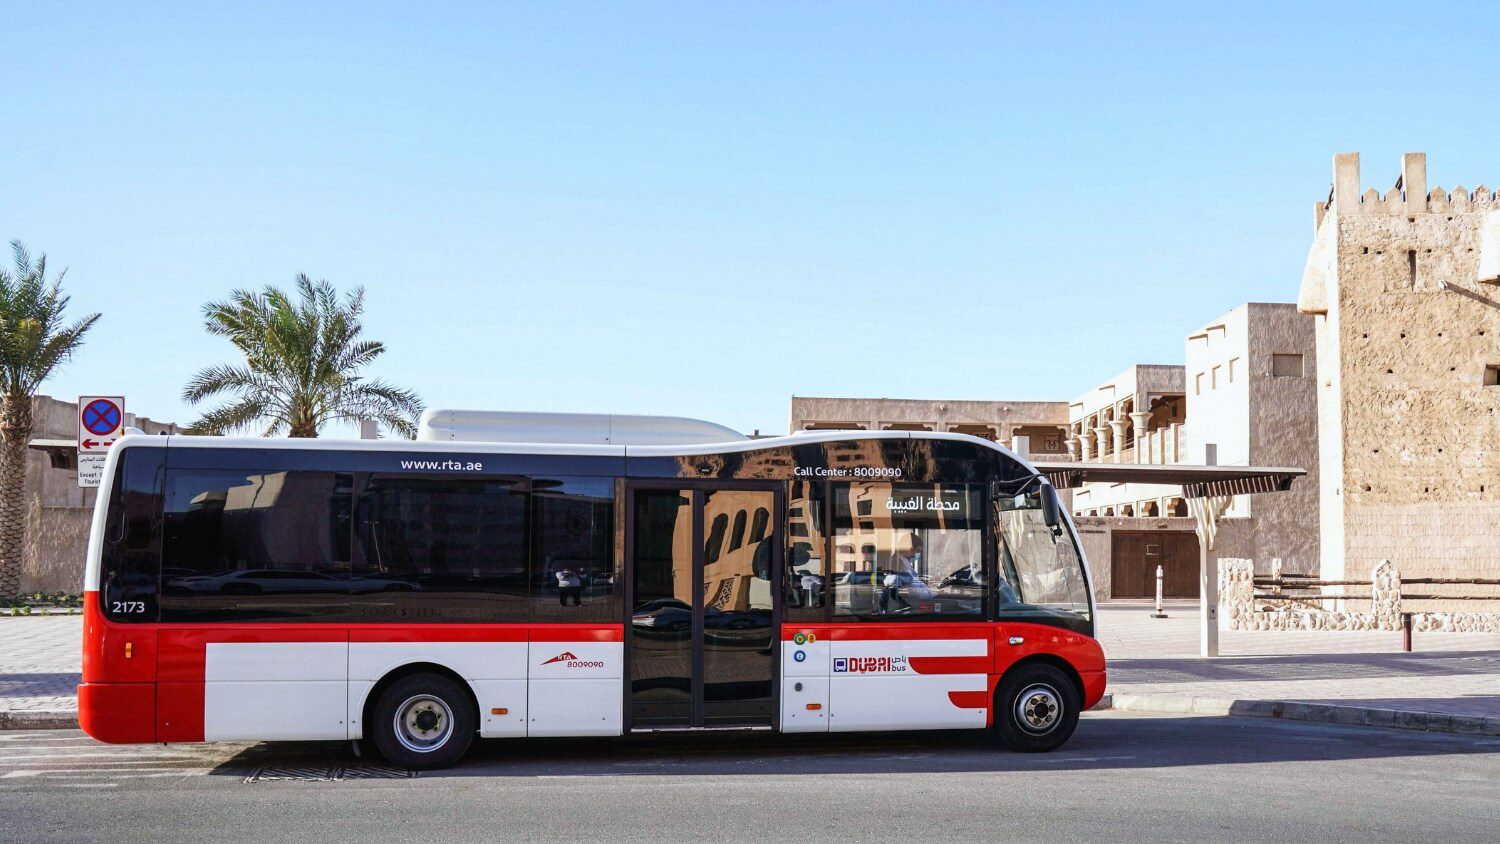 Dubai's RTA Launches Weekend Bus Route W20 Linking Metro Station to Al Mamzar Beach